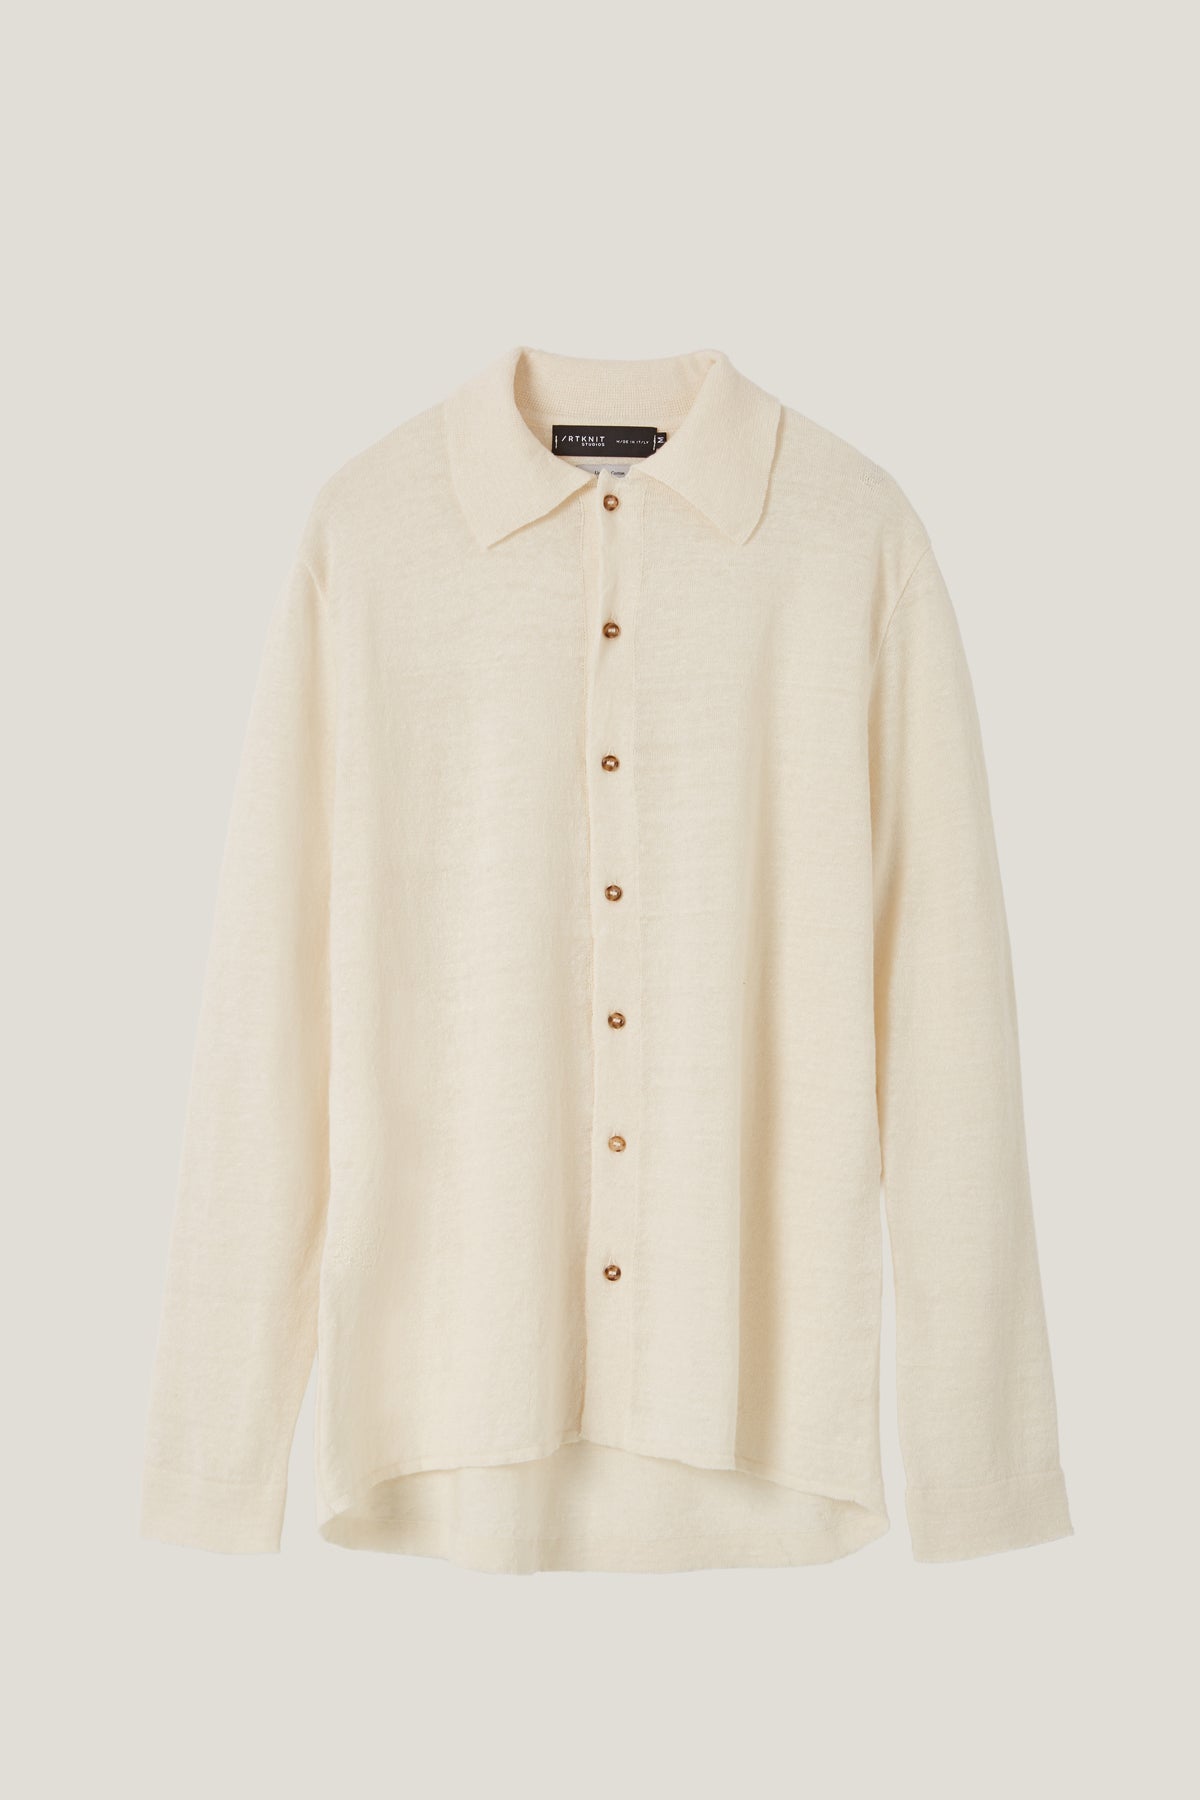 the linen cotton knit shirt imperfect version 6 milk white